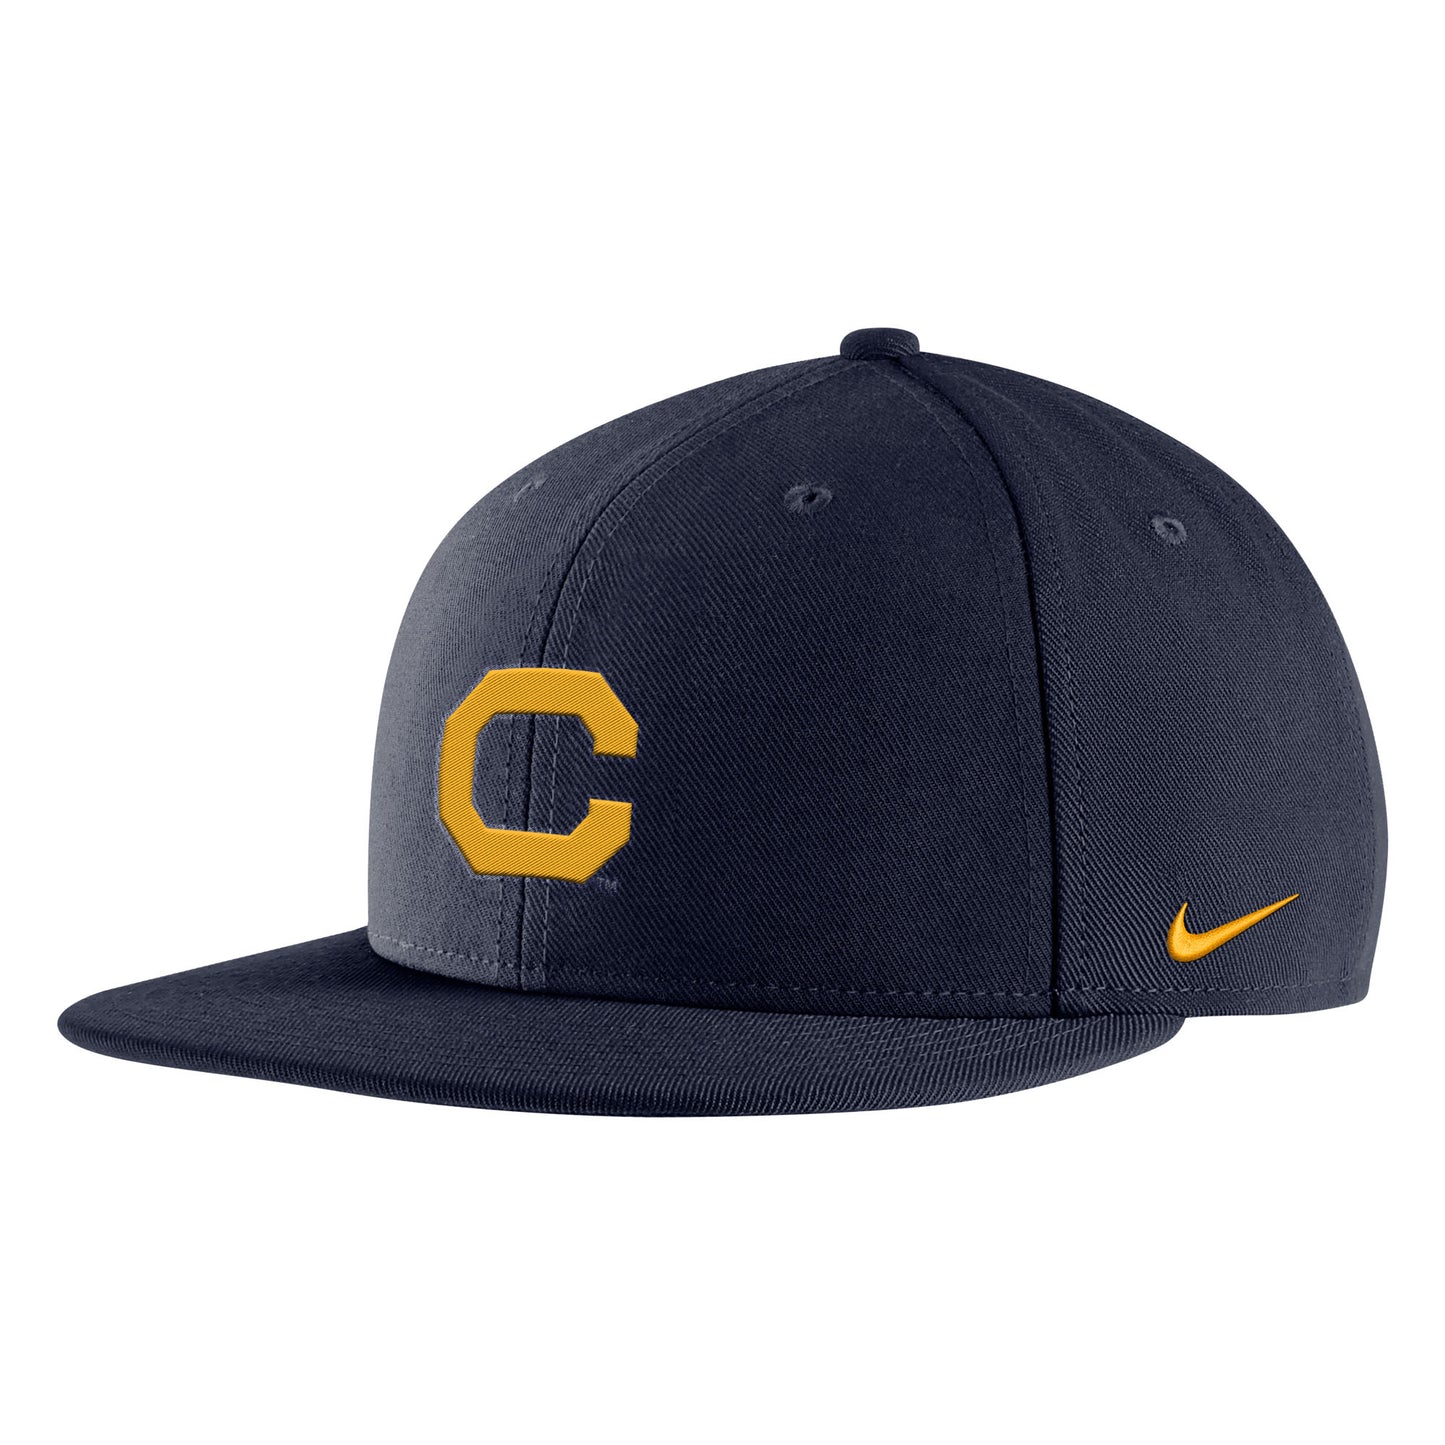 U.C. Berkeley Cal Nike Pro Flatbill Hat-Navy with C block logo.-Shop College Wear